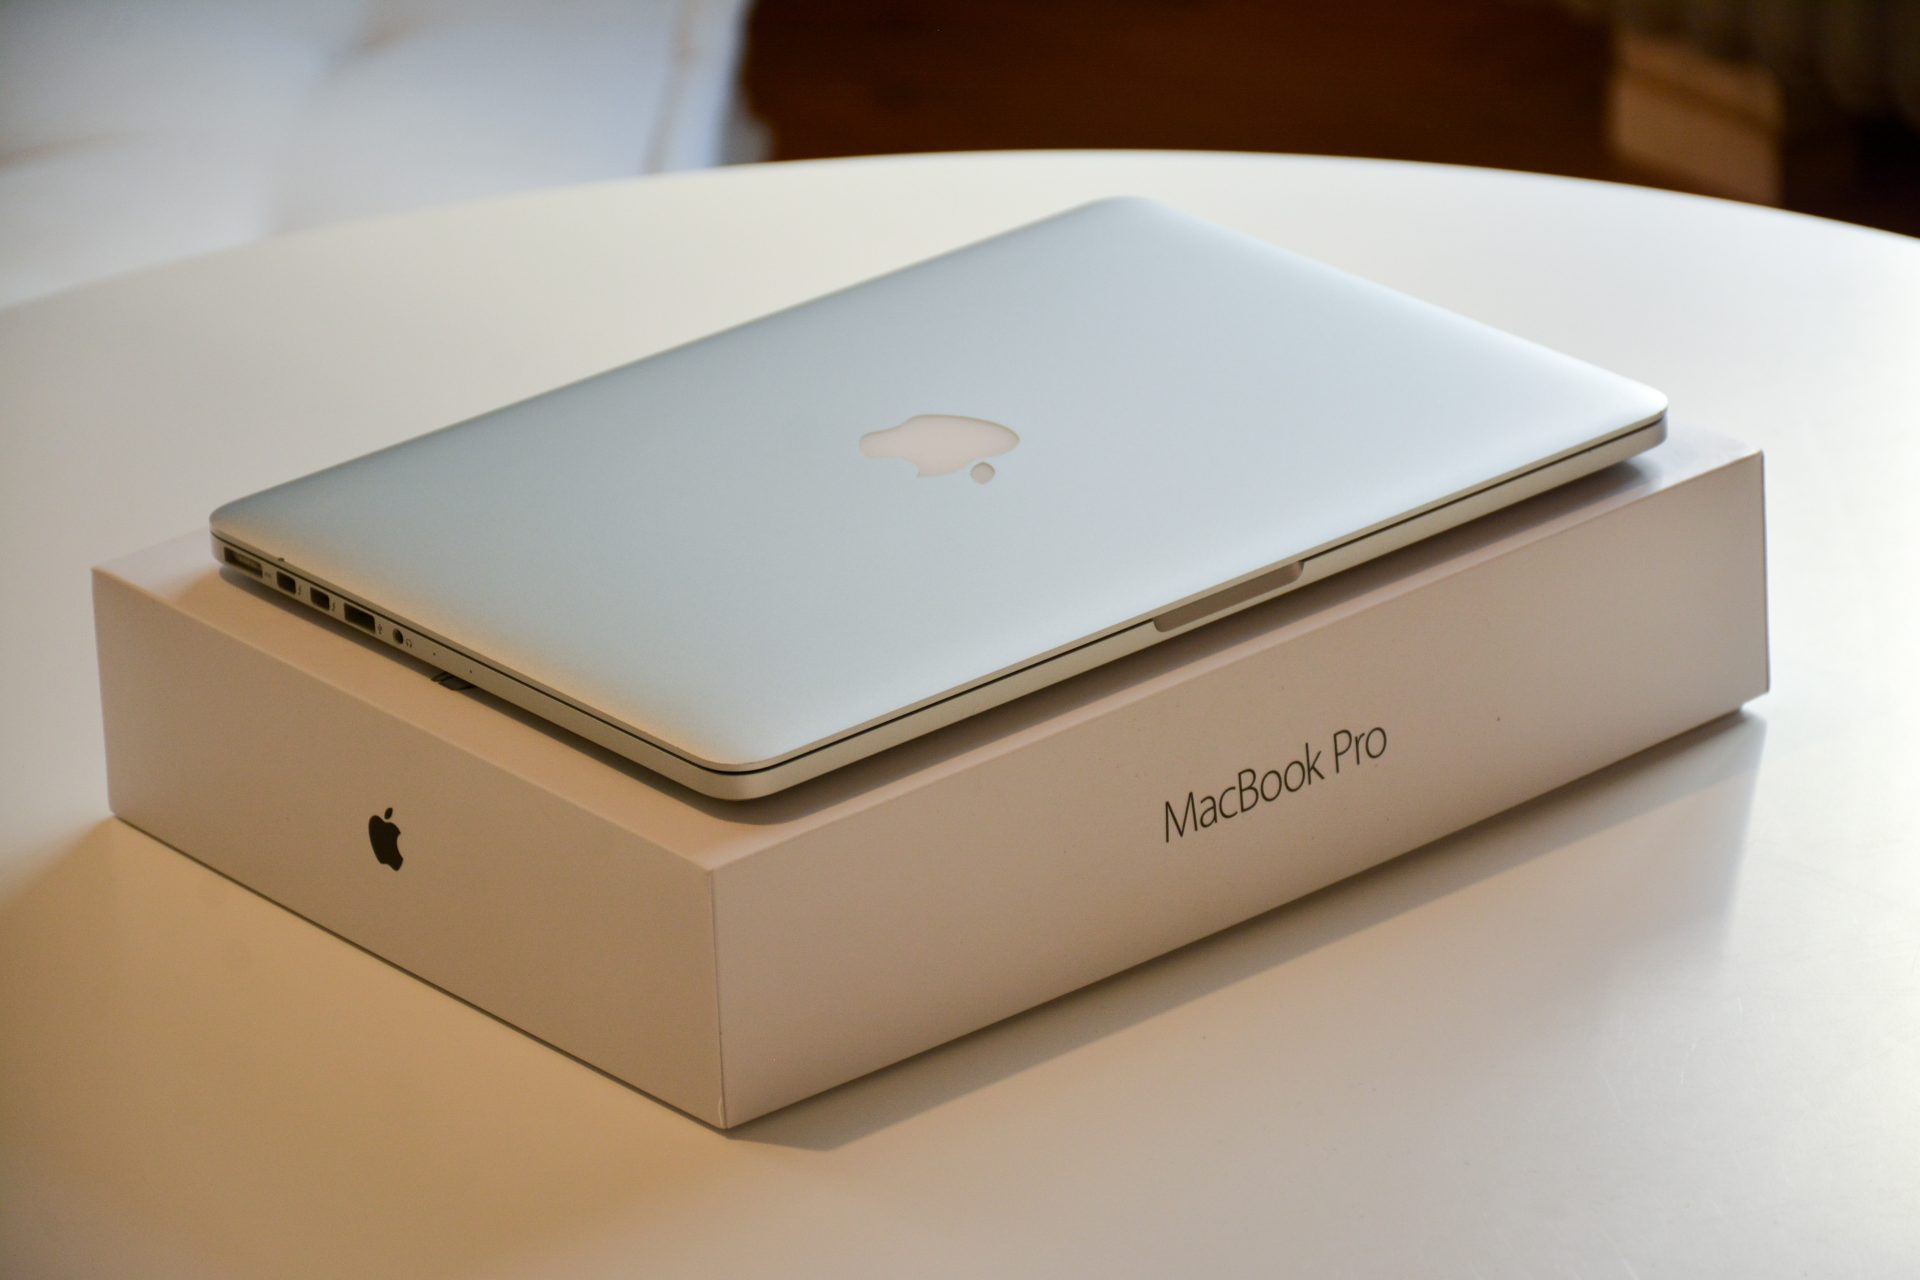 macbook pro and box